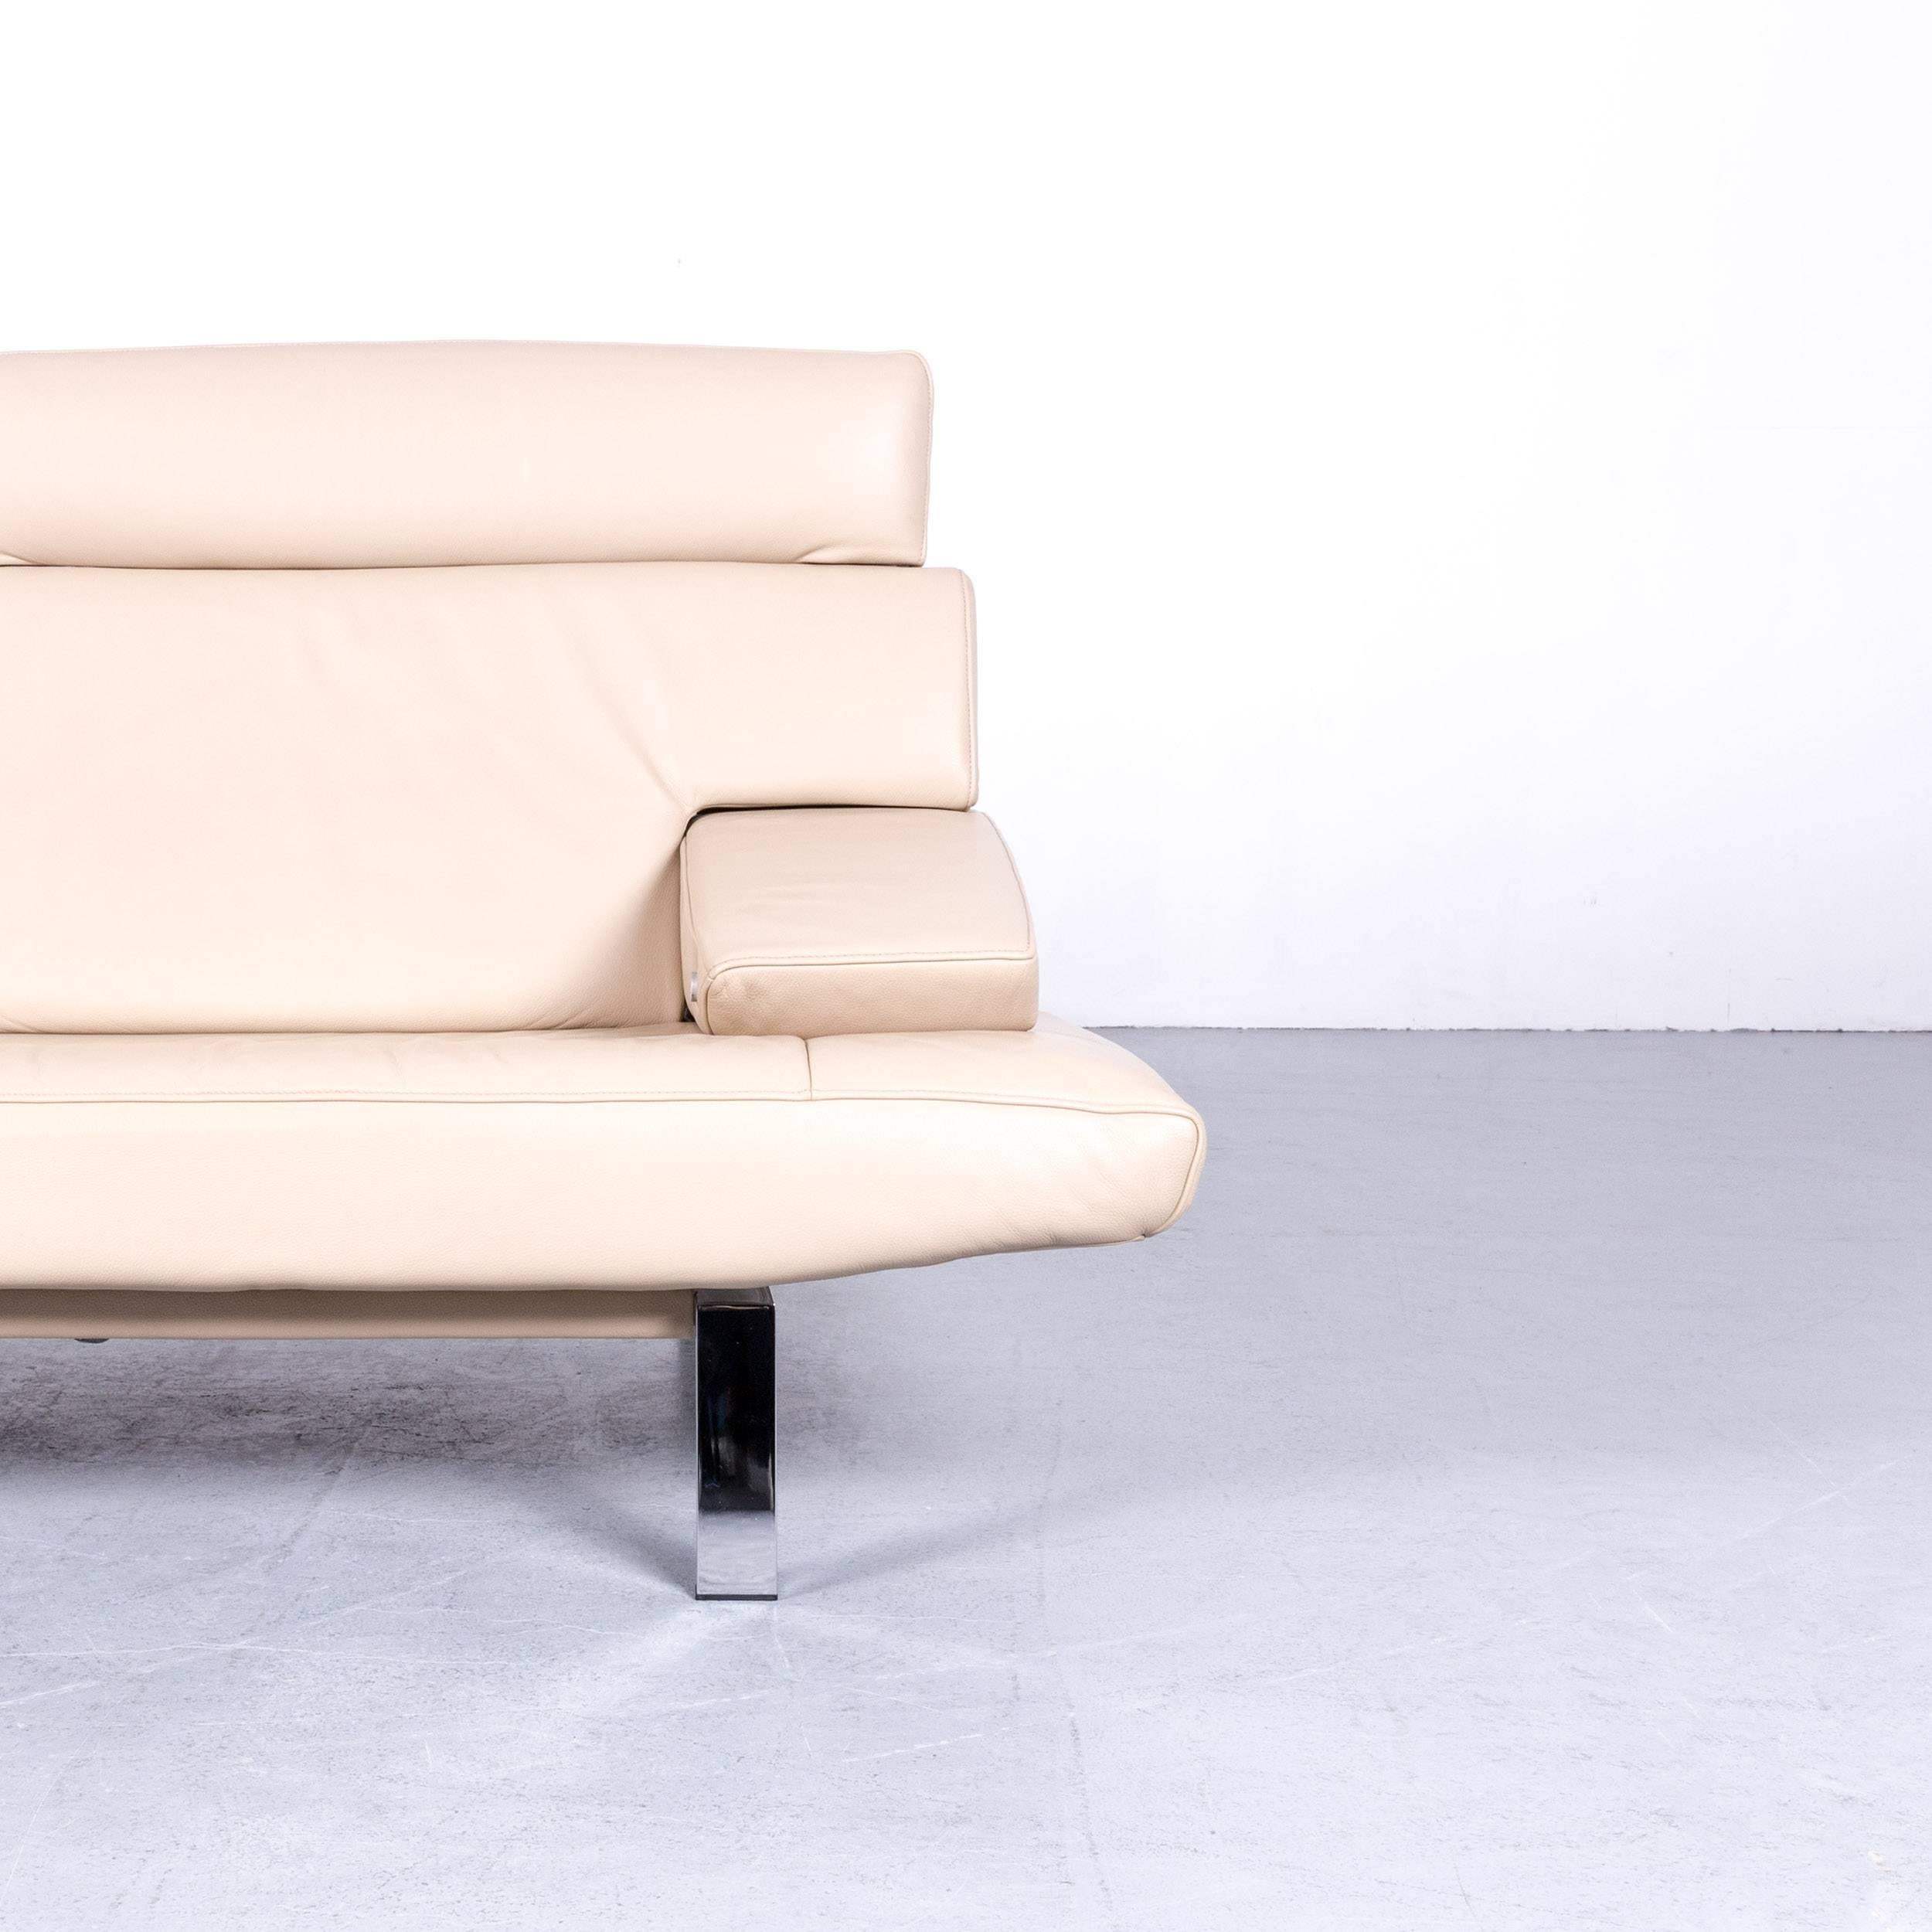 De Sede DS 451 designer sofa leather crème beige relax function two-seat modern.